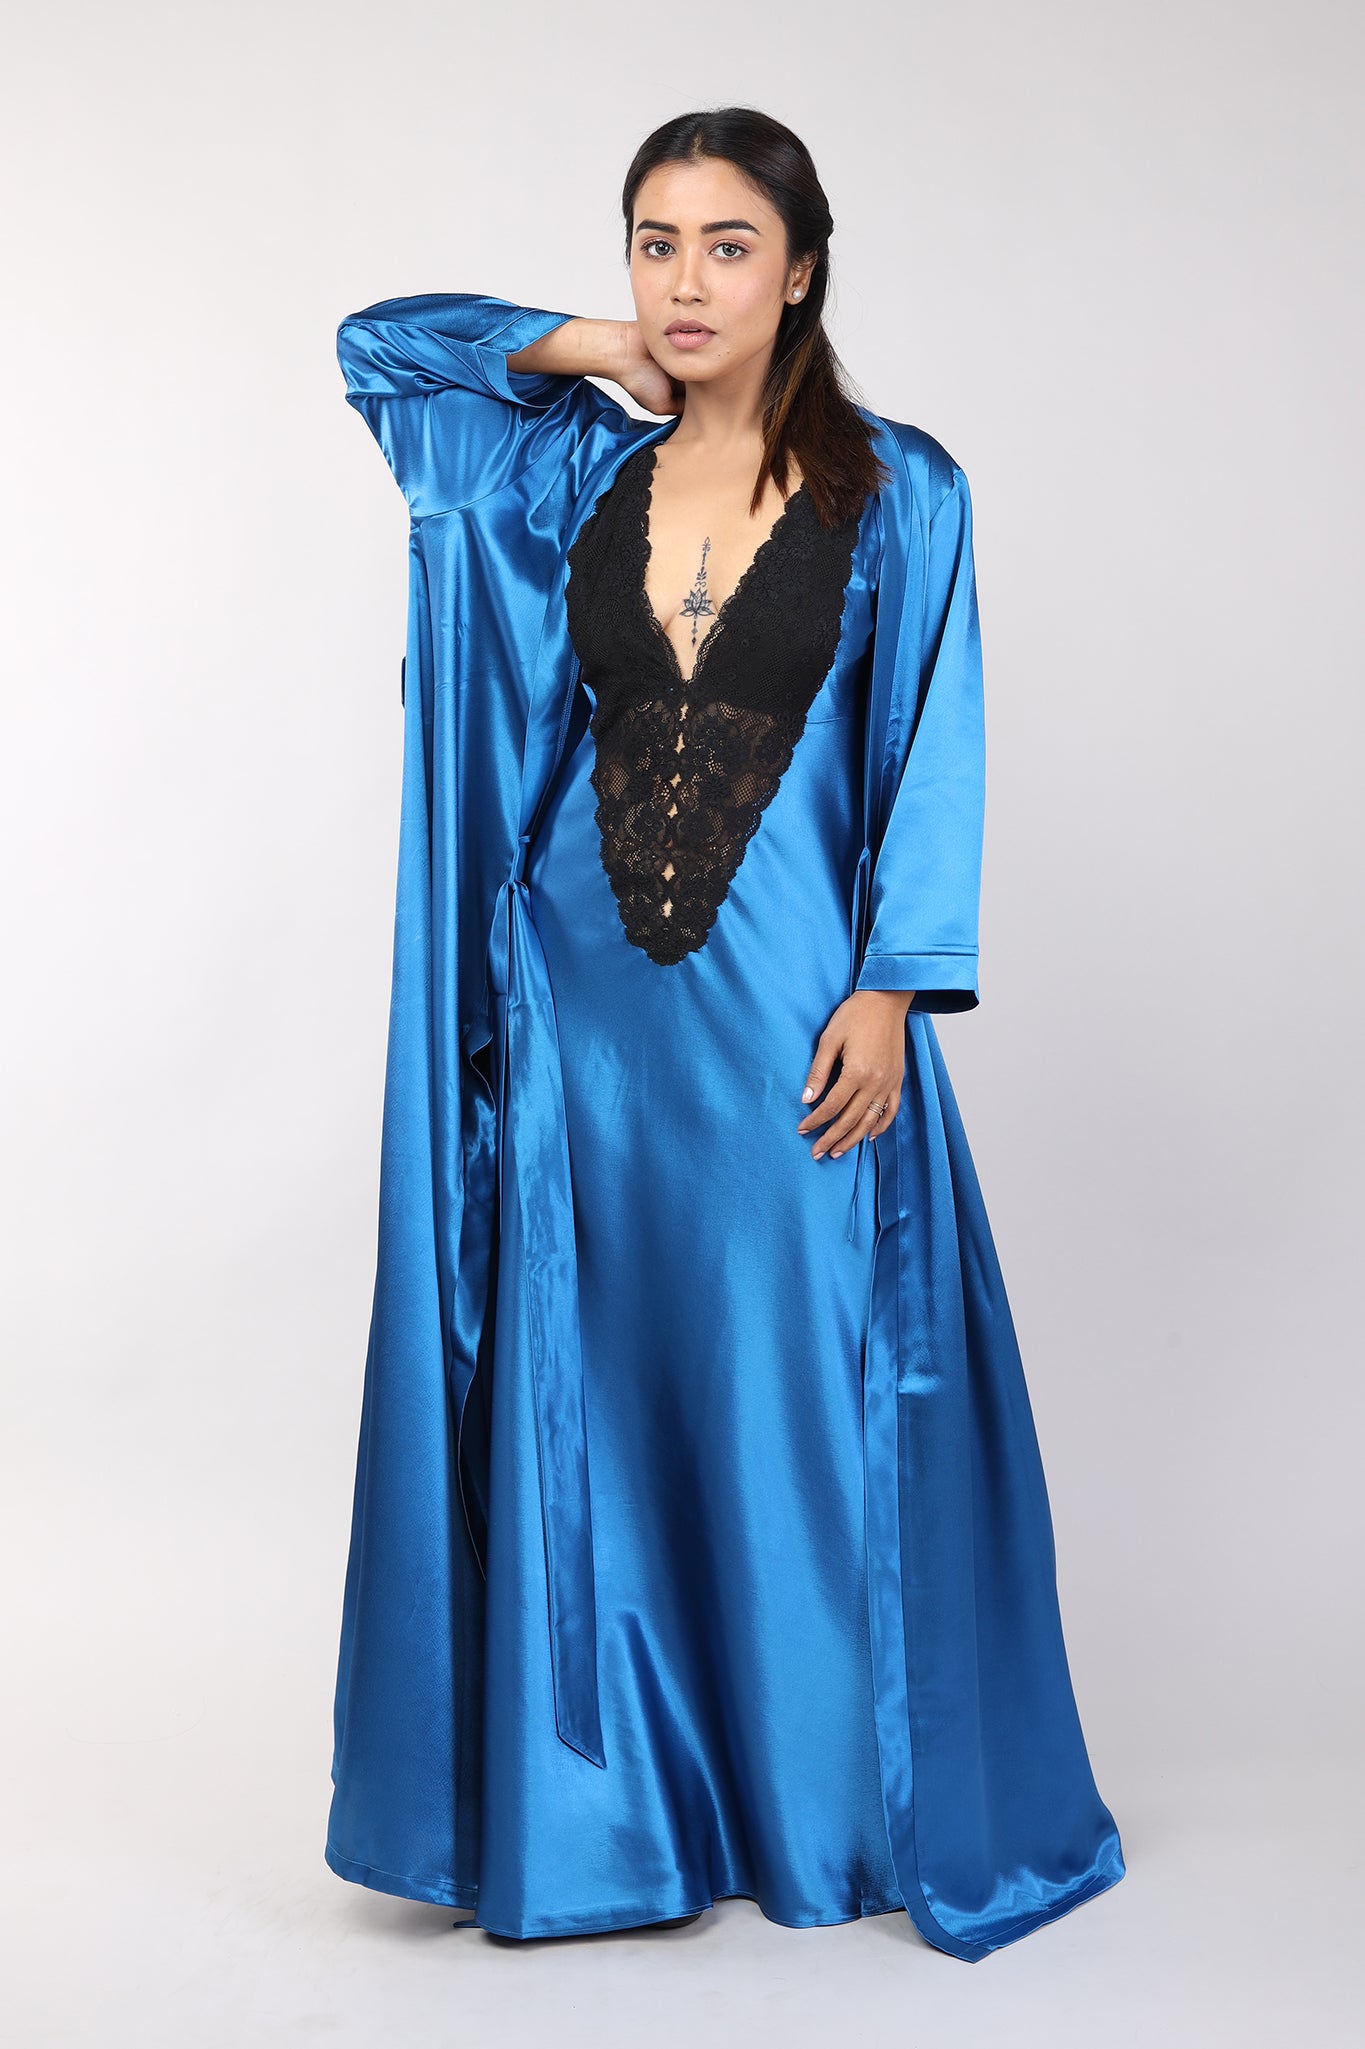 Women Teal Blue Satin Bridal Nighty Gown Set